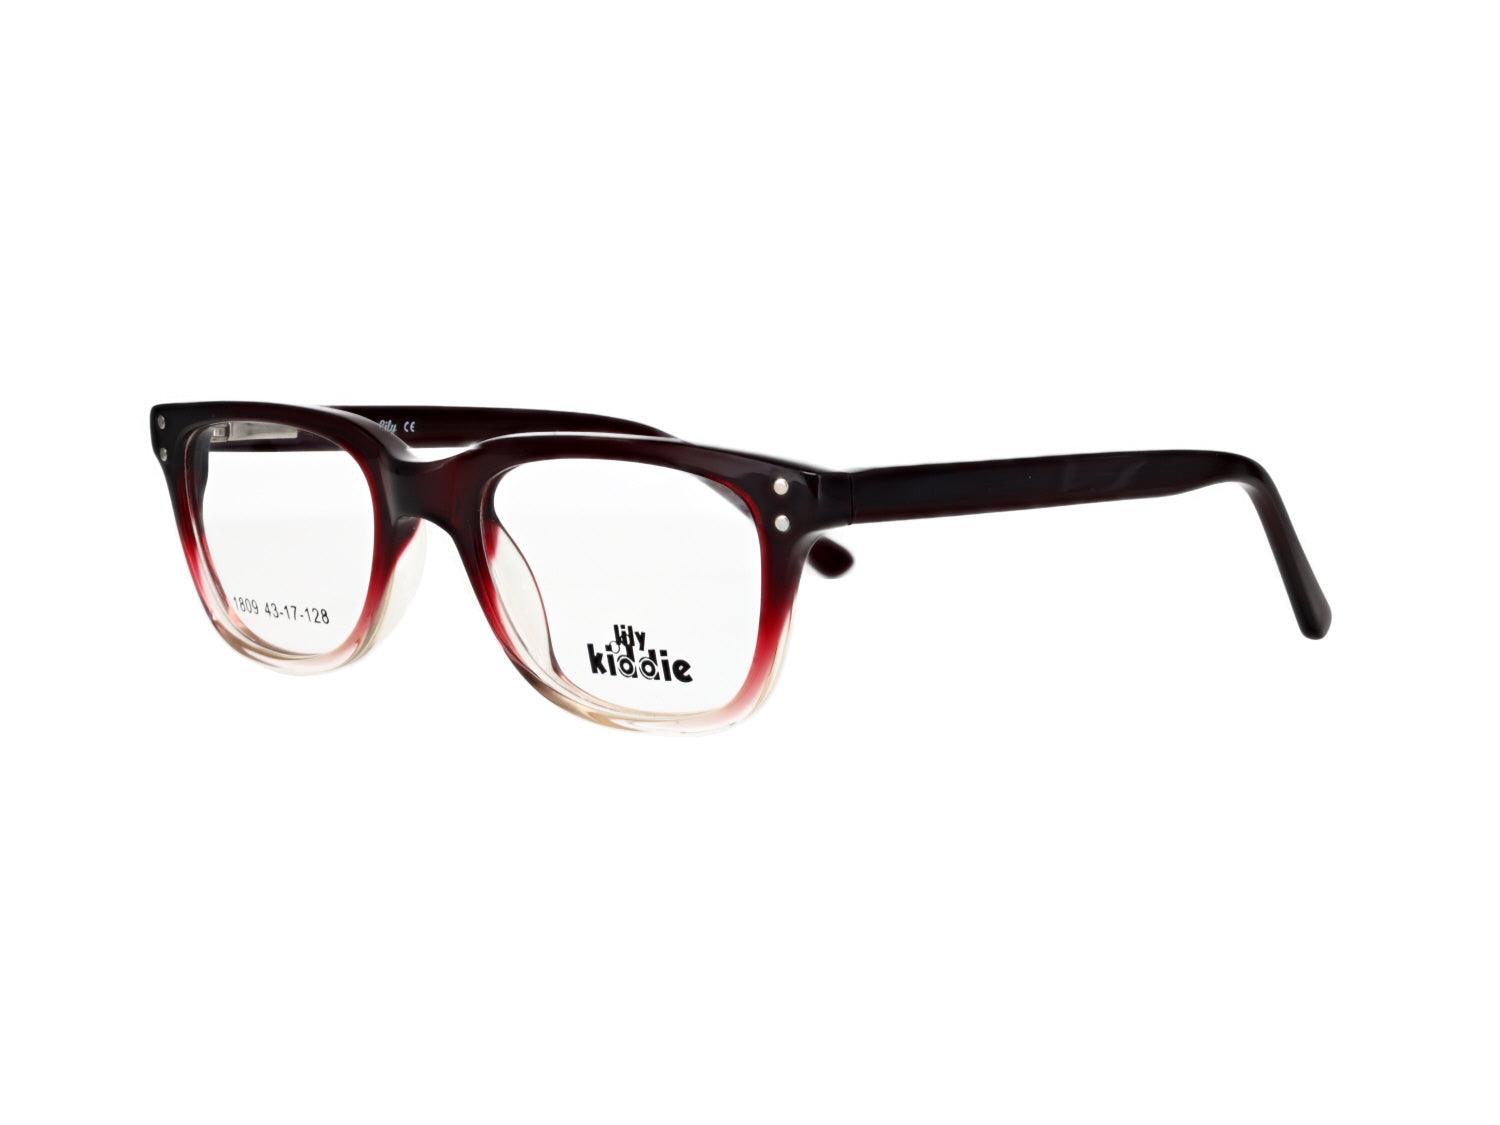 Lily Eyeglasses, 1809 C2 - Vision 770